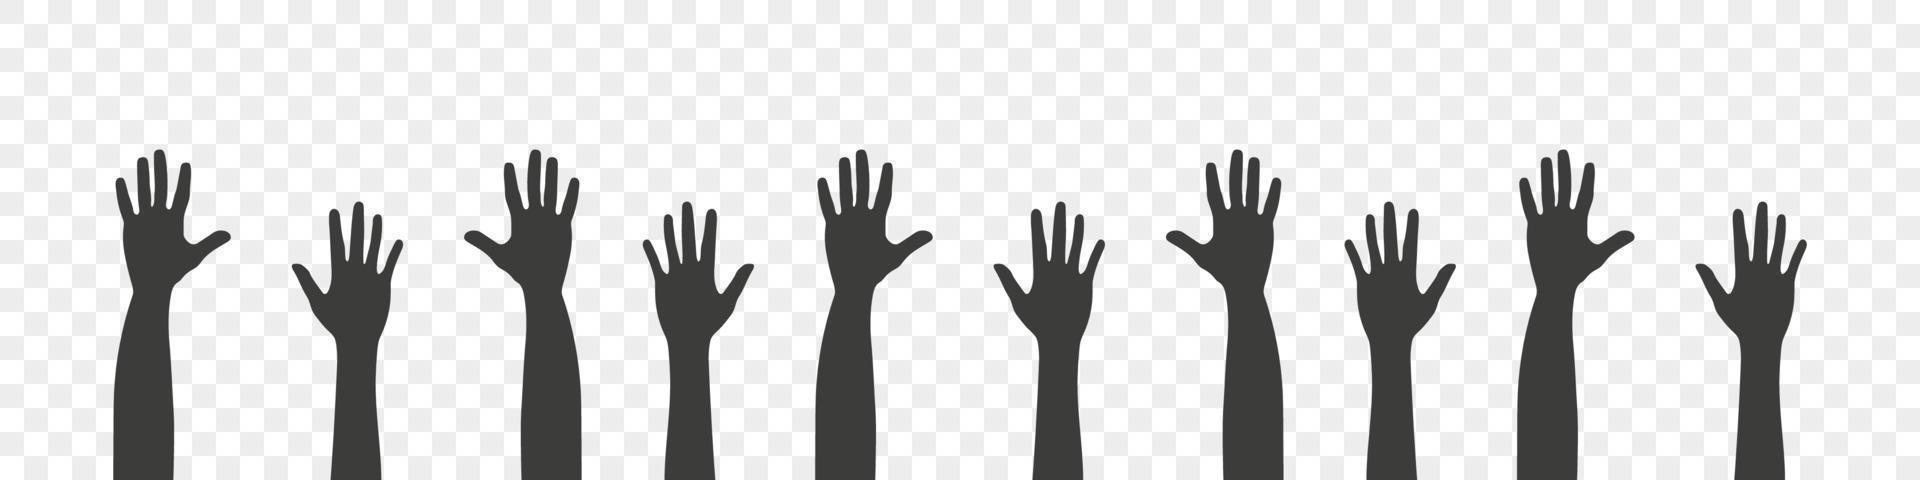 Raised hands. Silhouettes of hands up. Teamwork, collaboration, voting, volunteering concert. Vector illustration